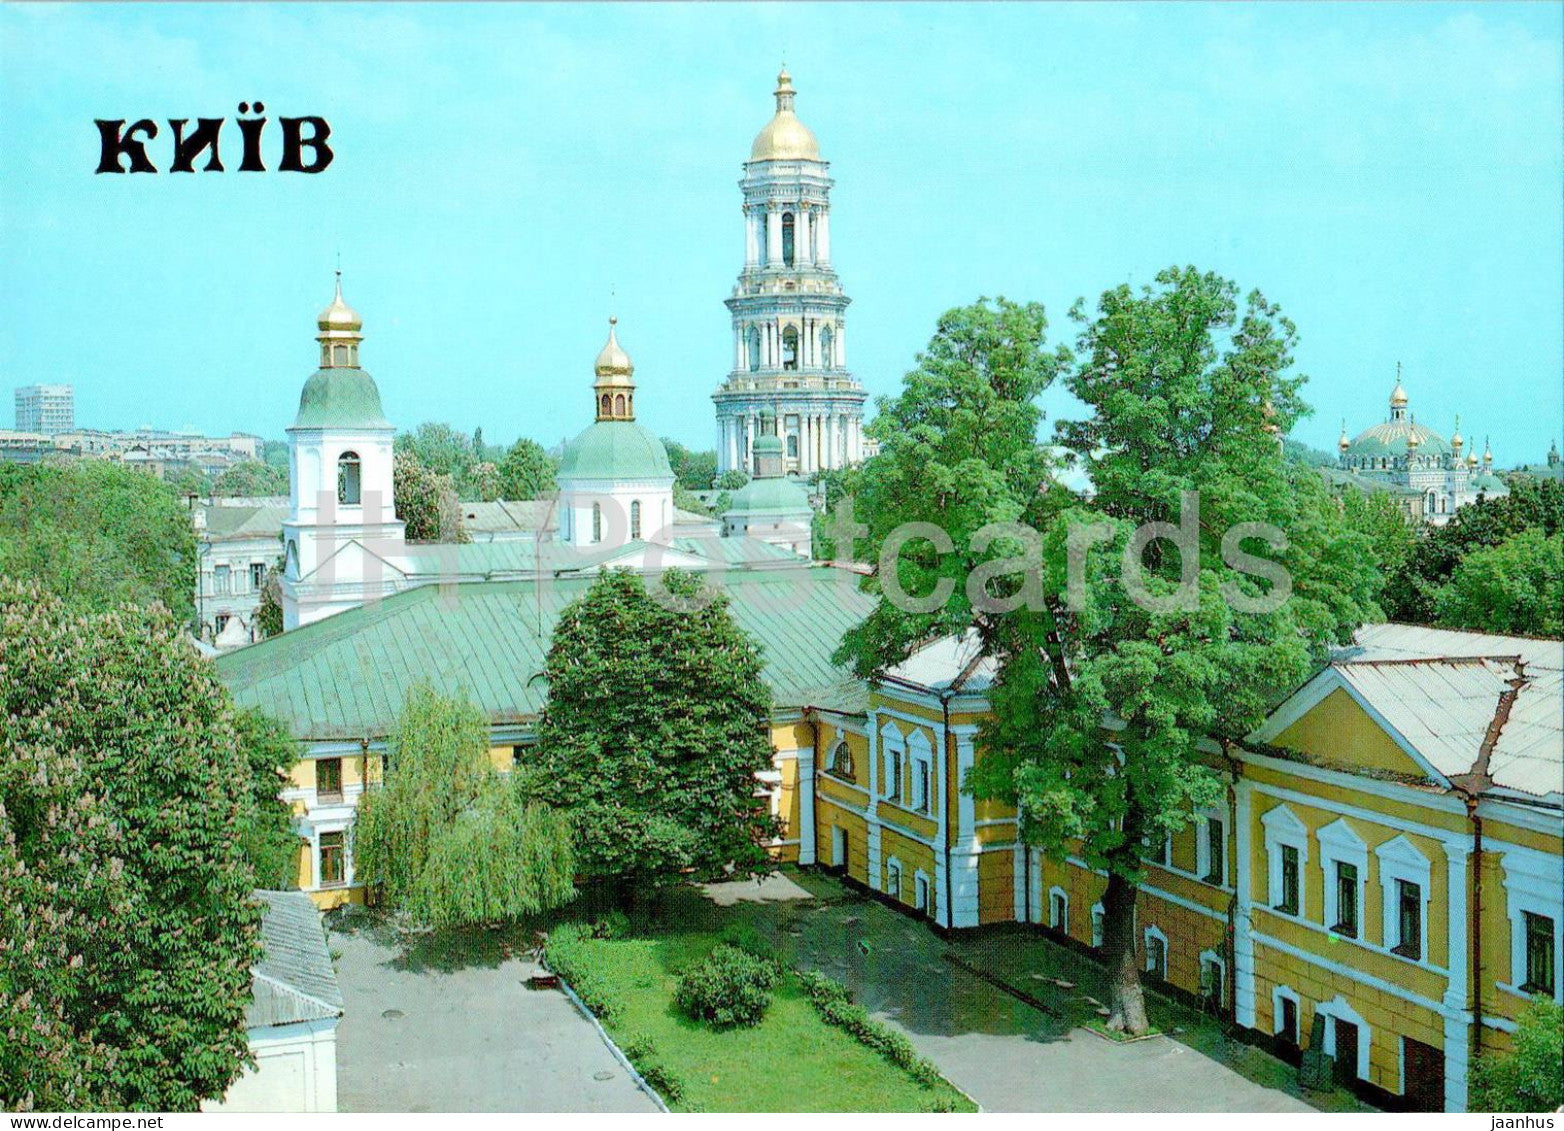 Kyiv - Kiev - Kyiv Pechersk Lavra - 1990 - Ukraine USSR - unused - JH Postcards